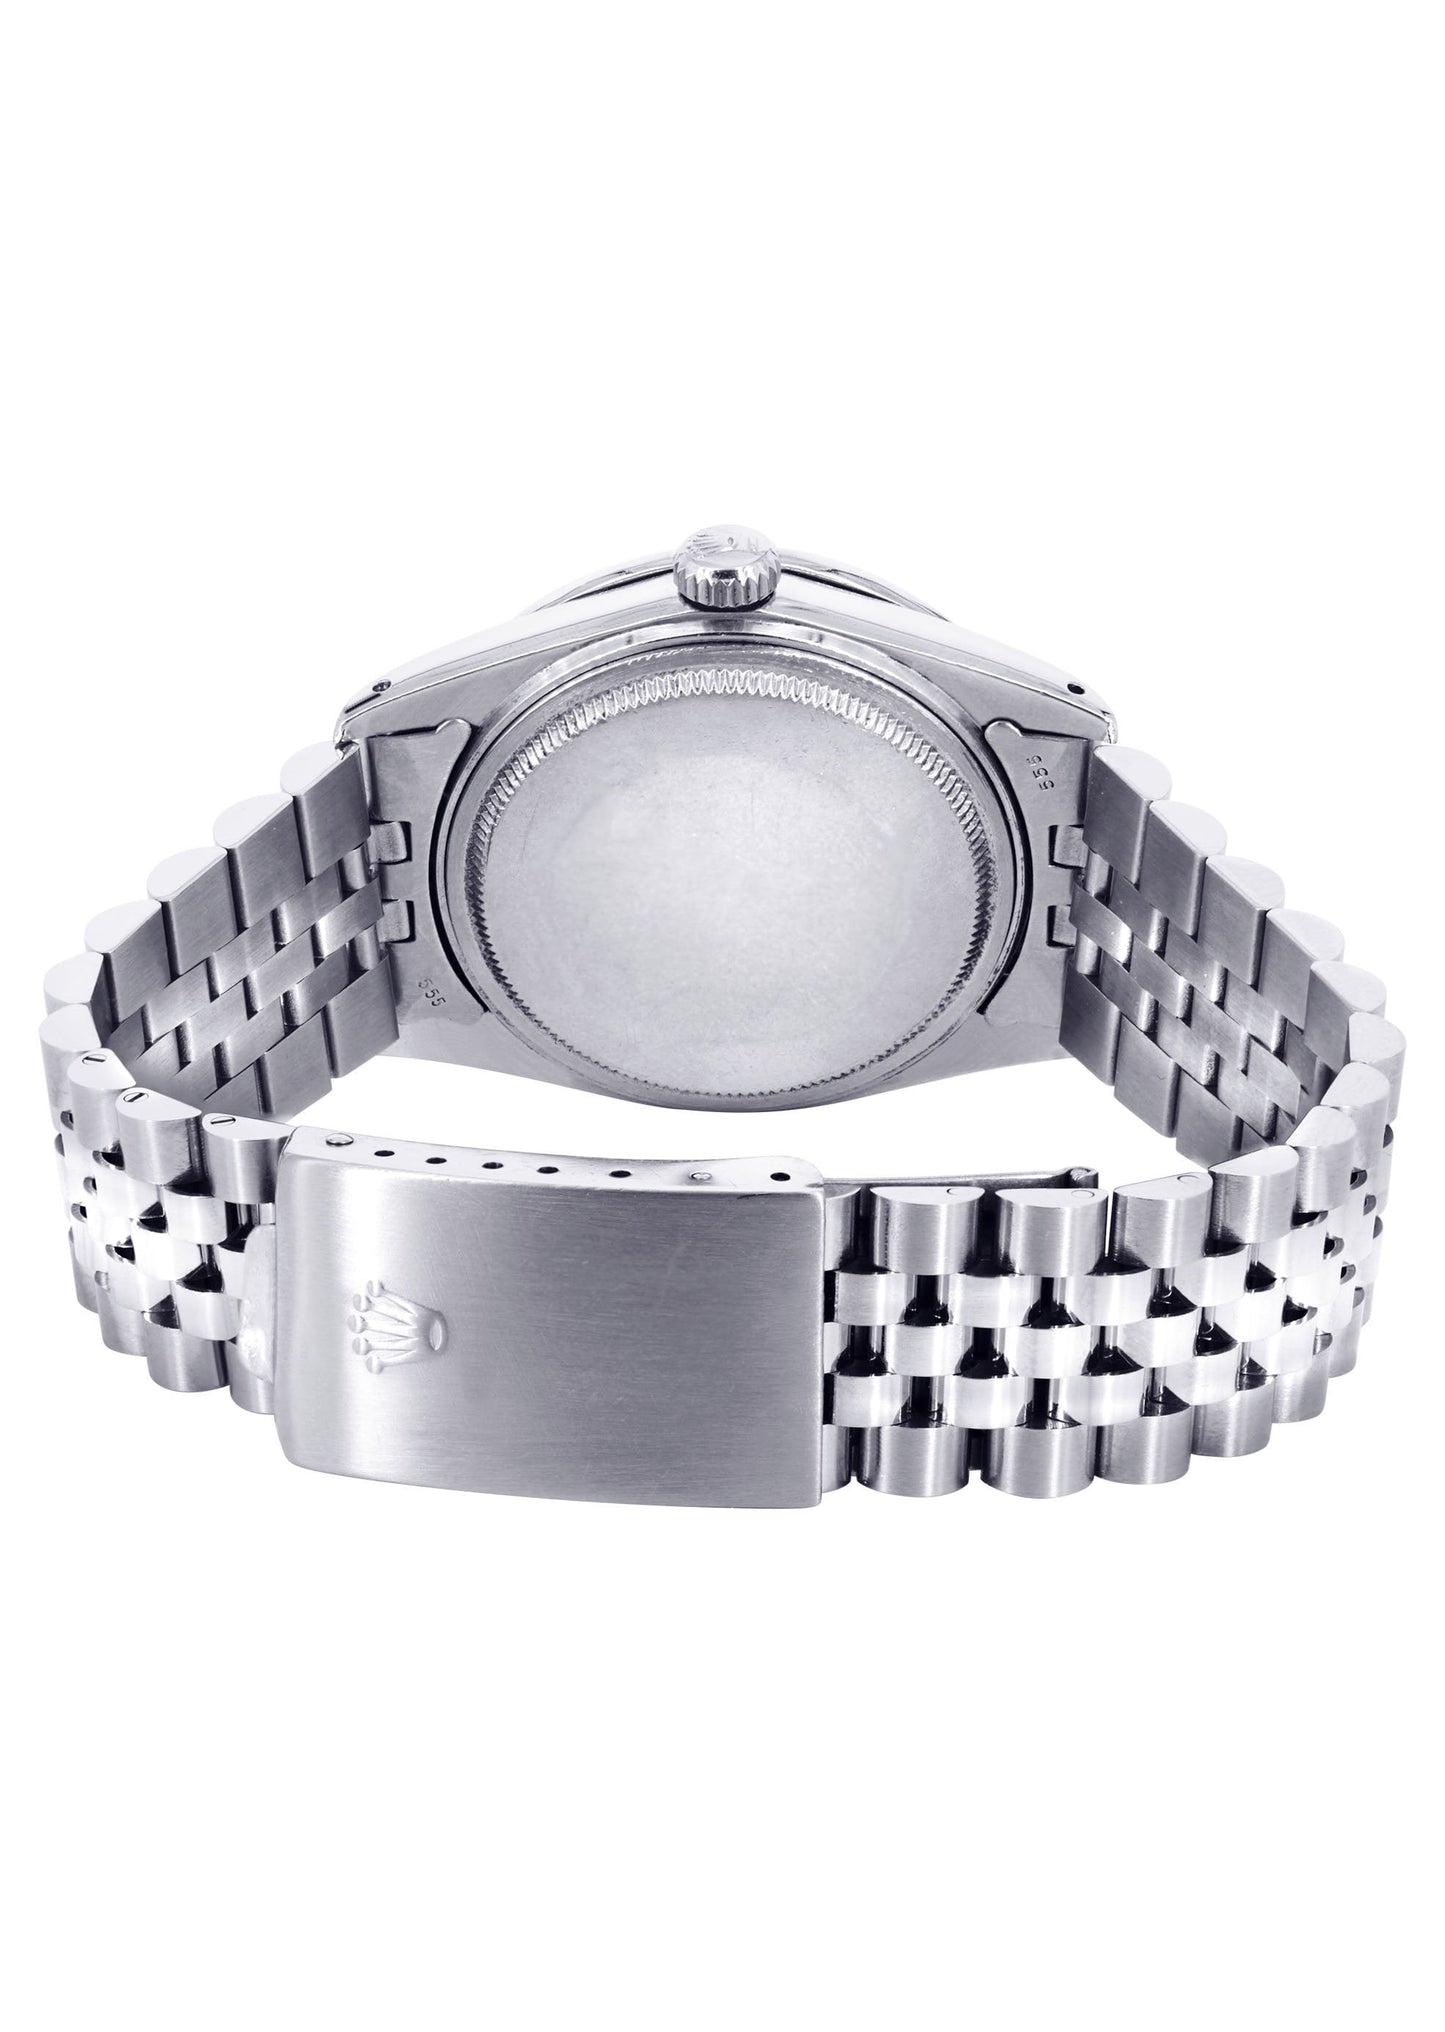 Diamond Gold Rolex Watch For Men 16200 | 36Mm | Rainbow Sapphire Bezel | Iced Out Diamond Dial | Jubilee Band